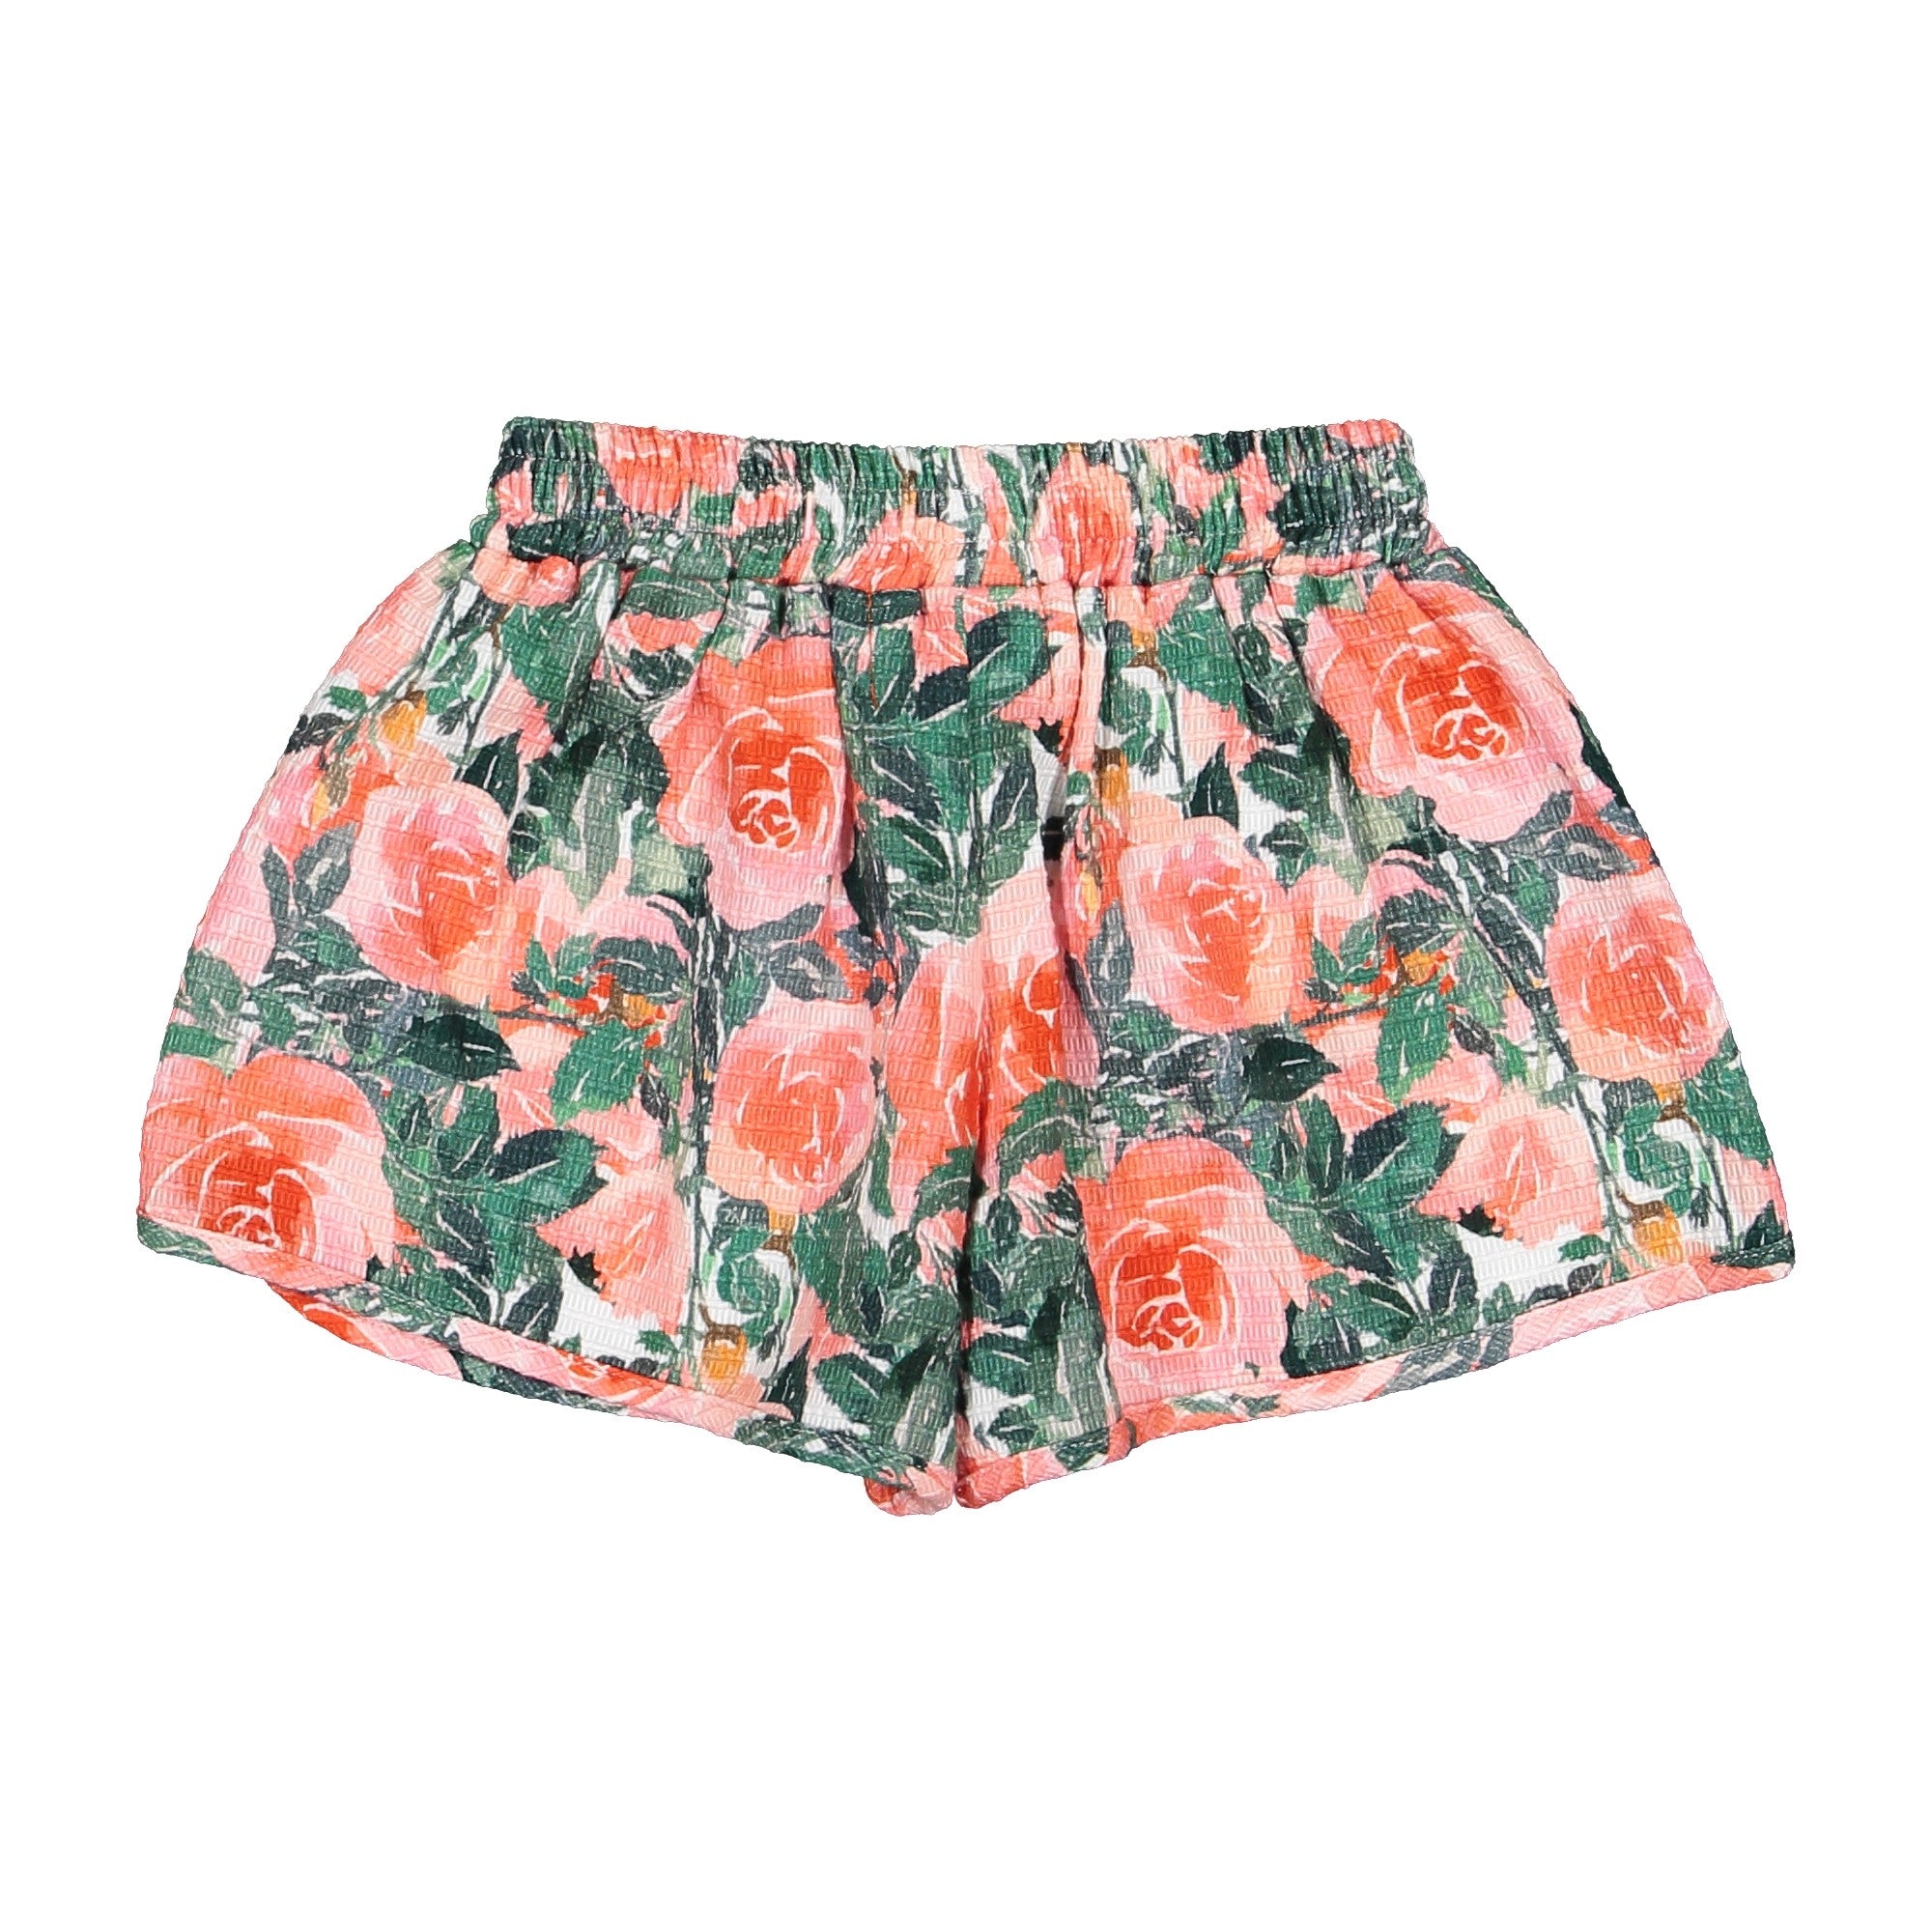 Flower print shorts